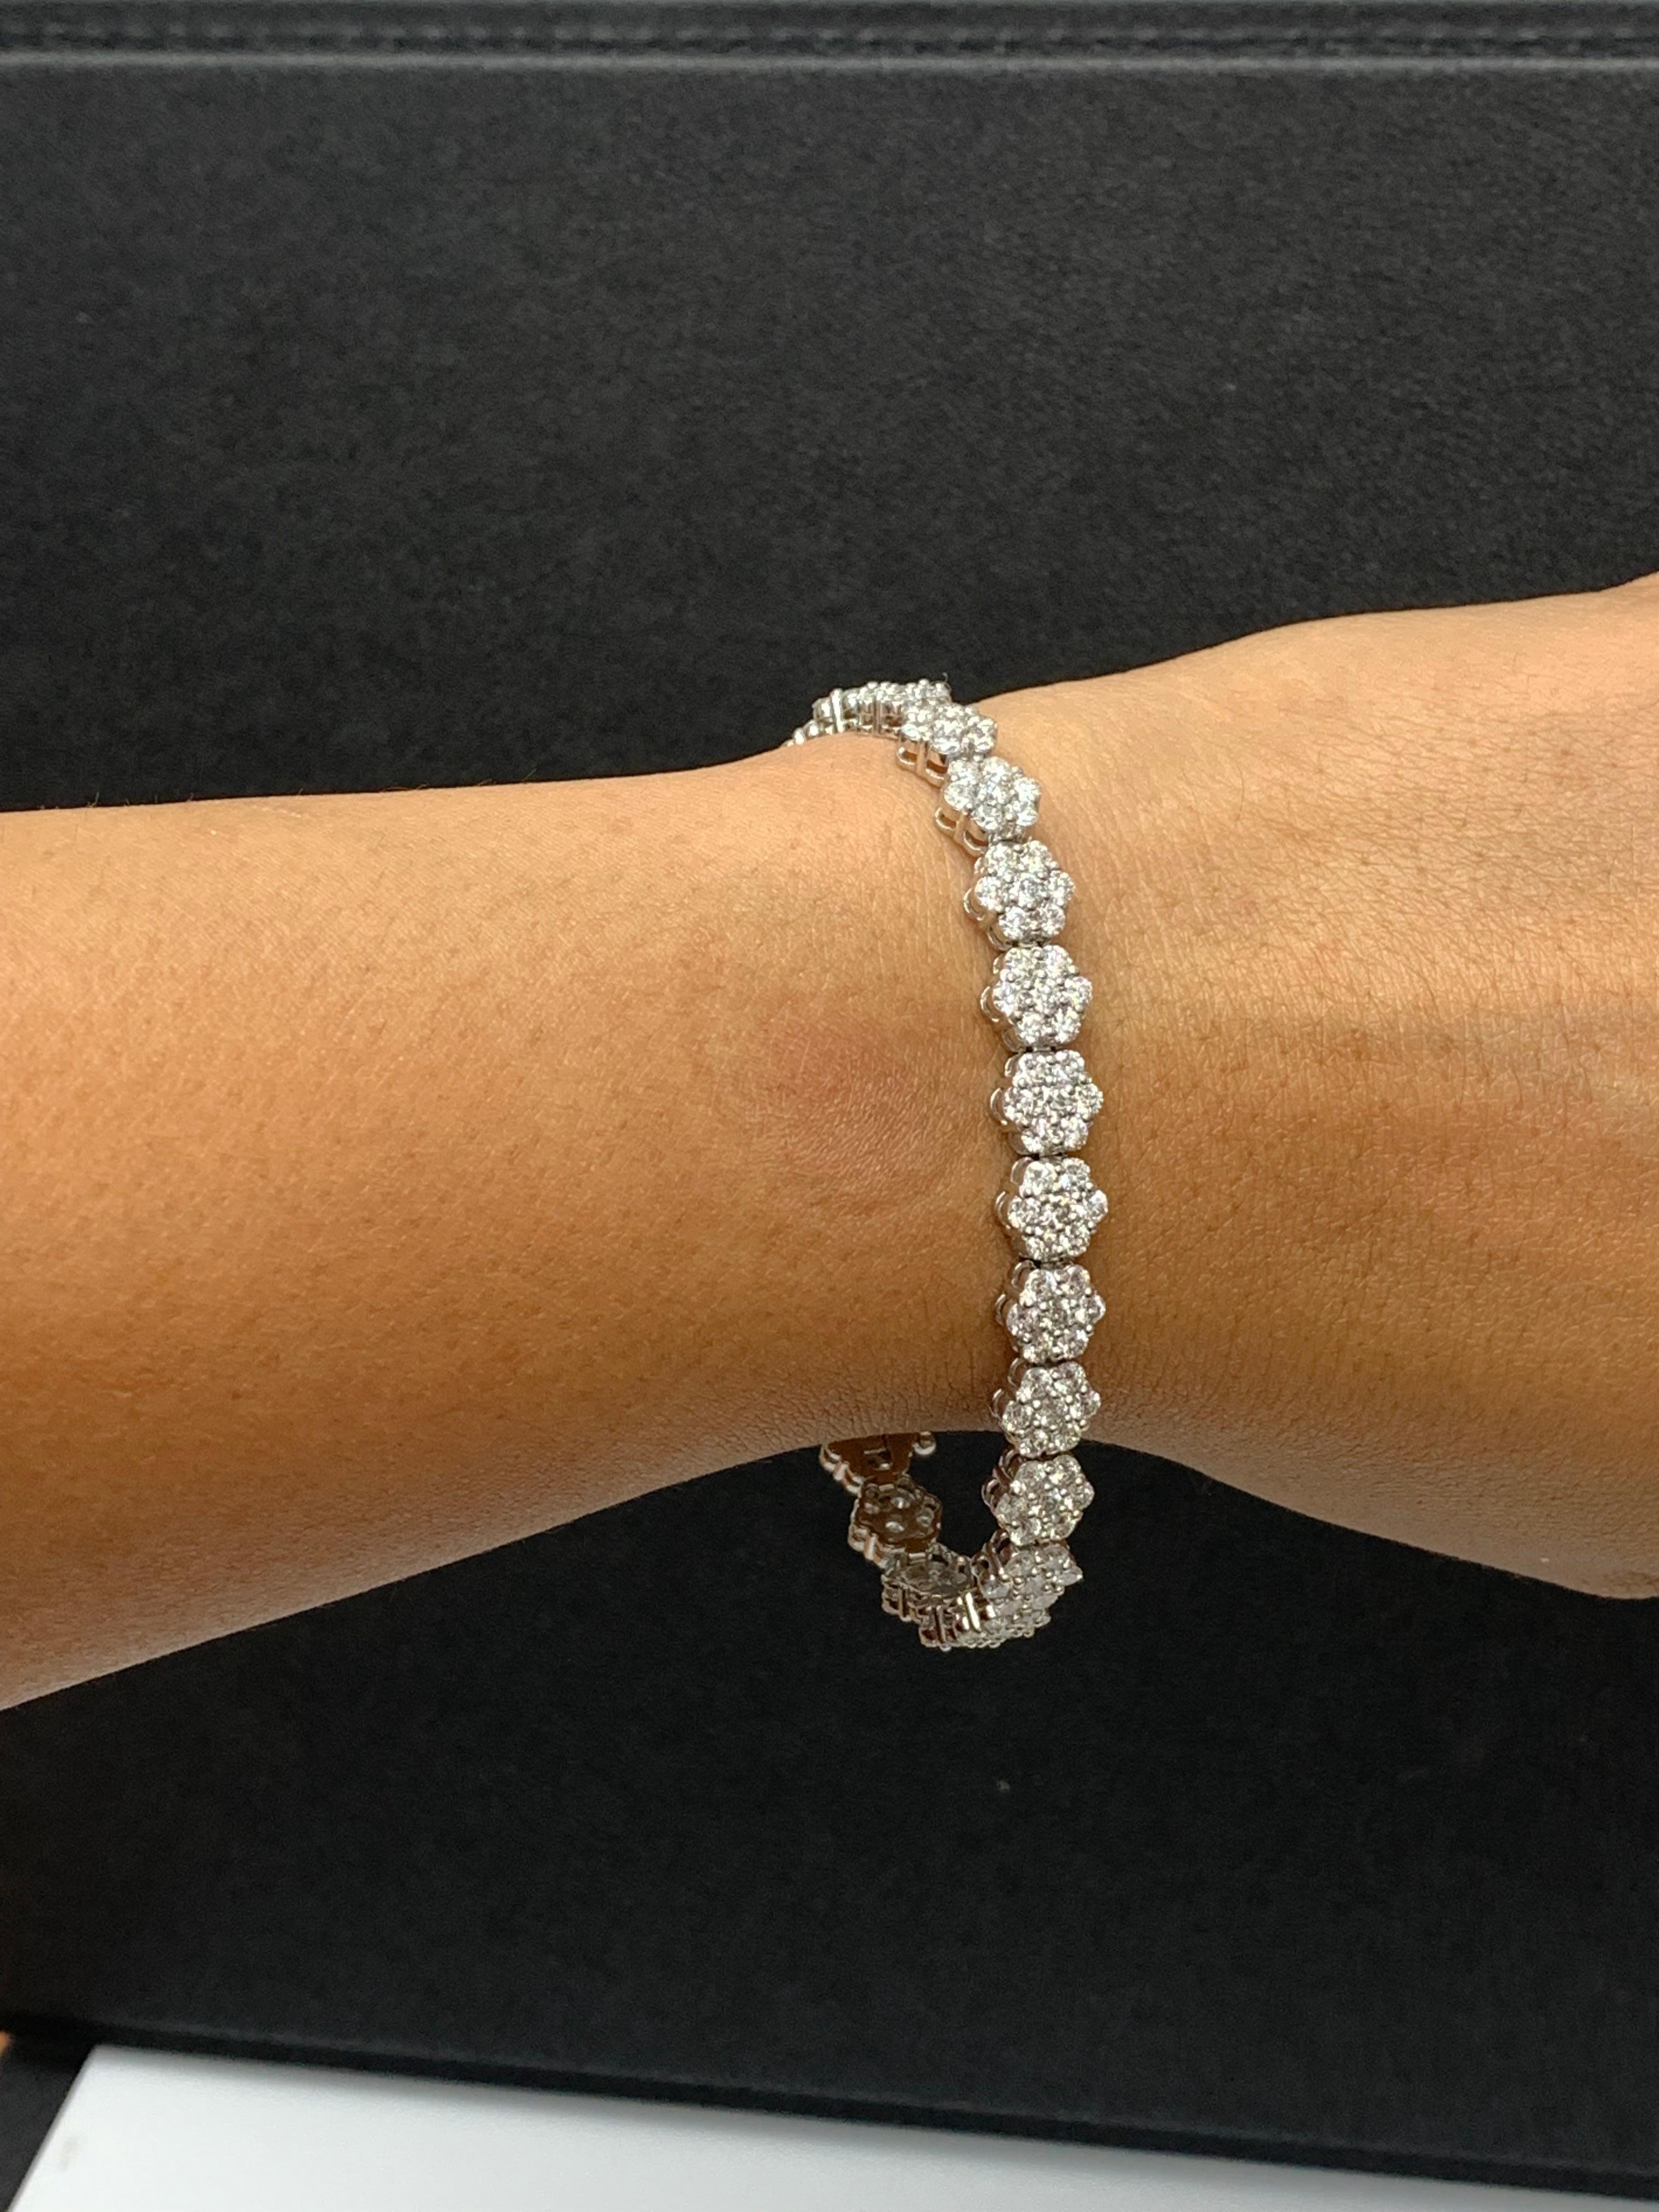 Women's 8.10 Carat Brilliant Cut Round Diamond Flower Bracelet in 14k White Gold For Sale